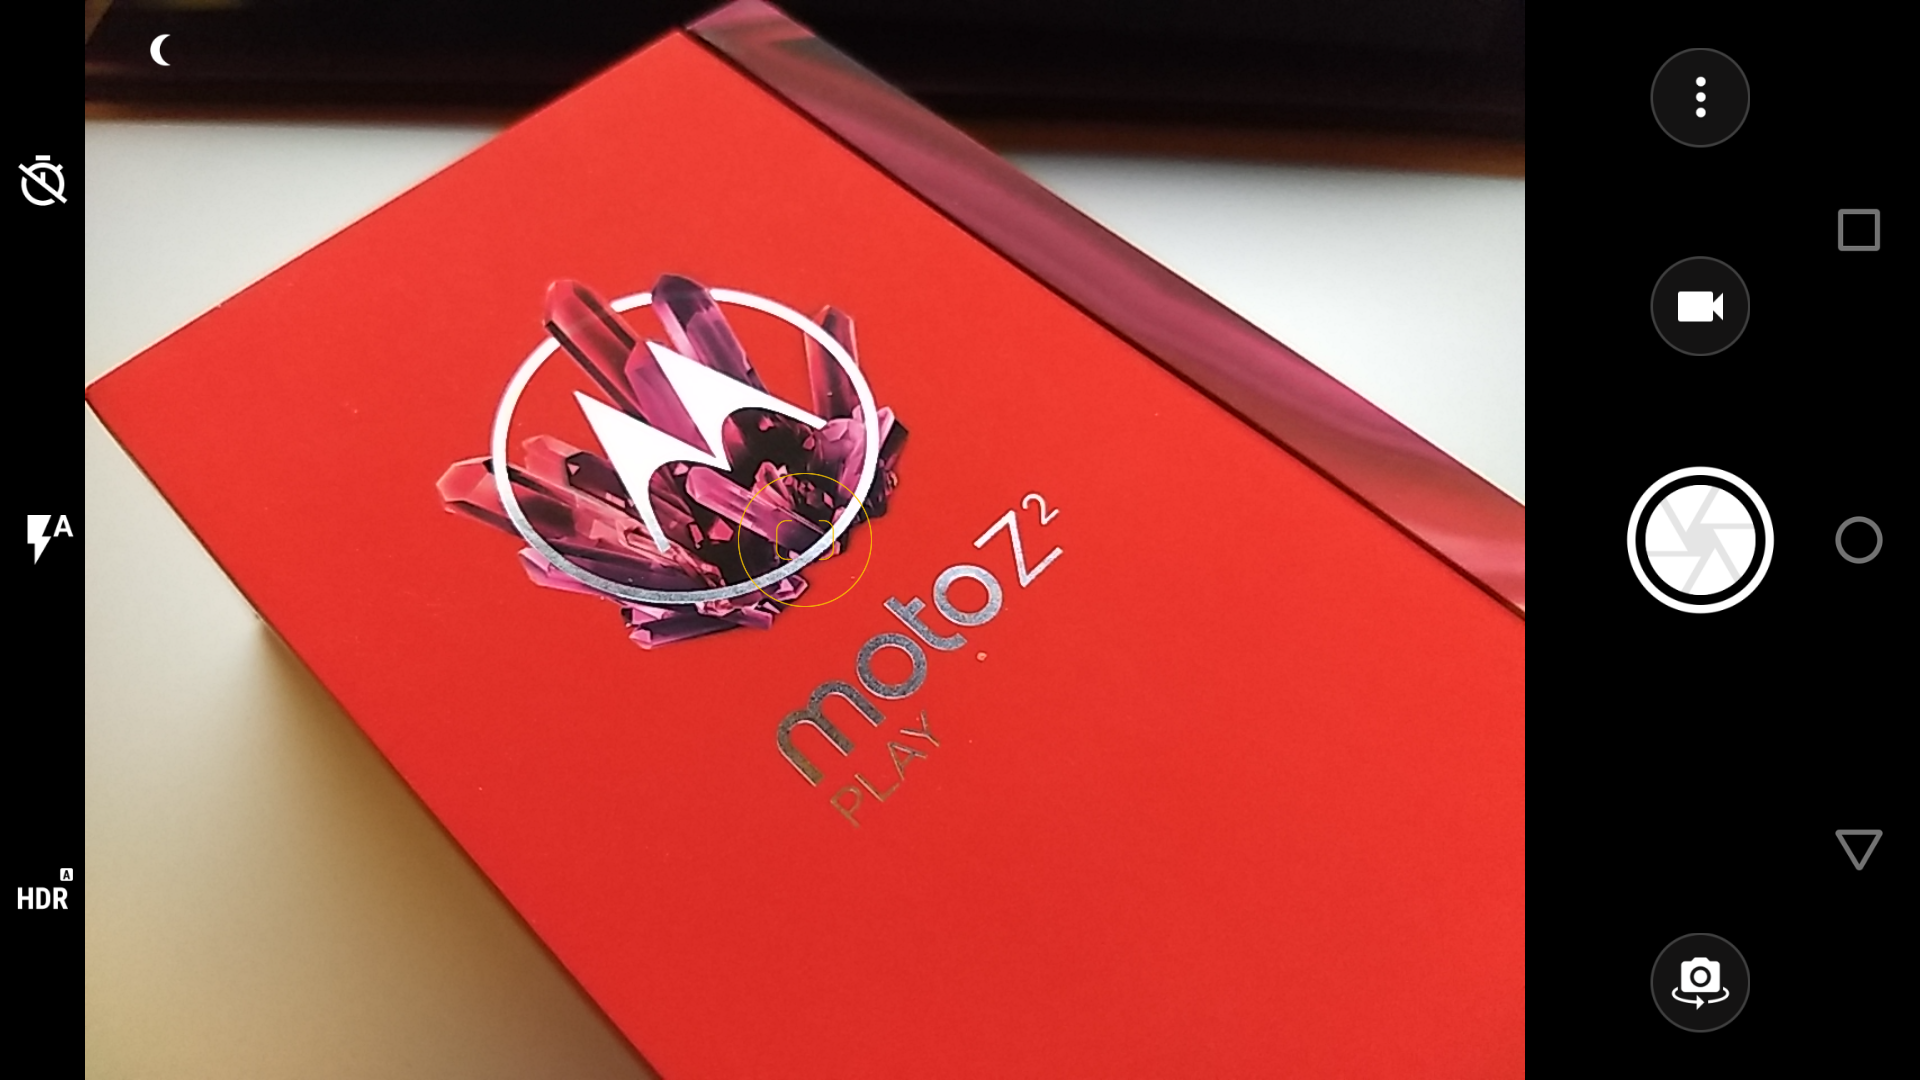 Periksa Motorola Moto Z2 Play 10 "width =" 1920 "height =" 1080